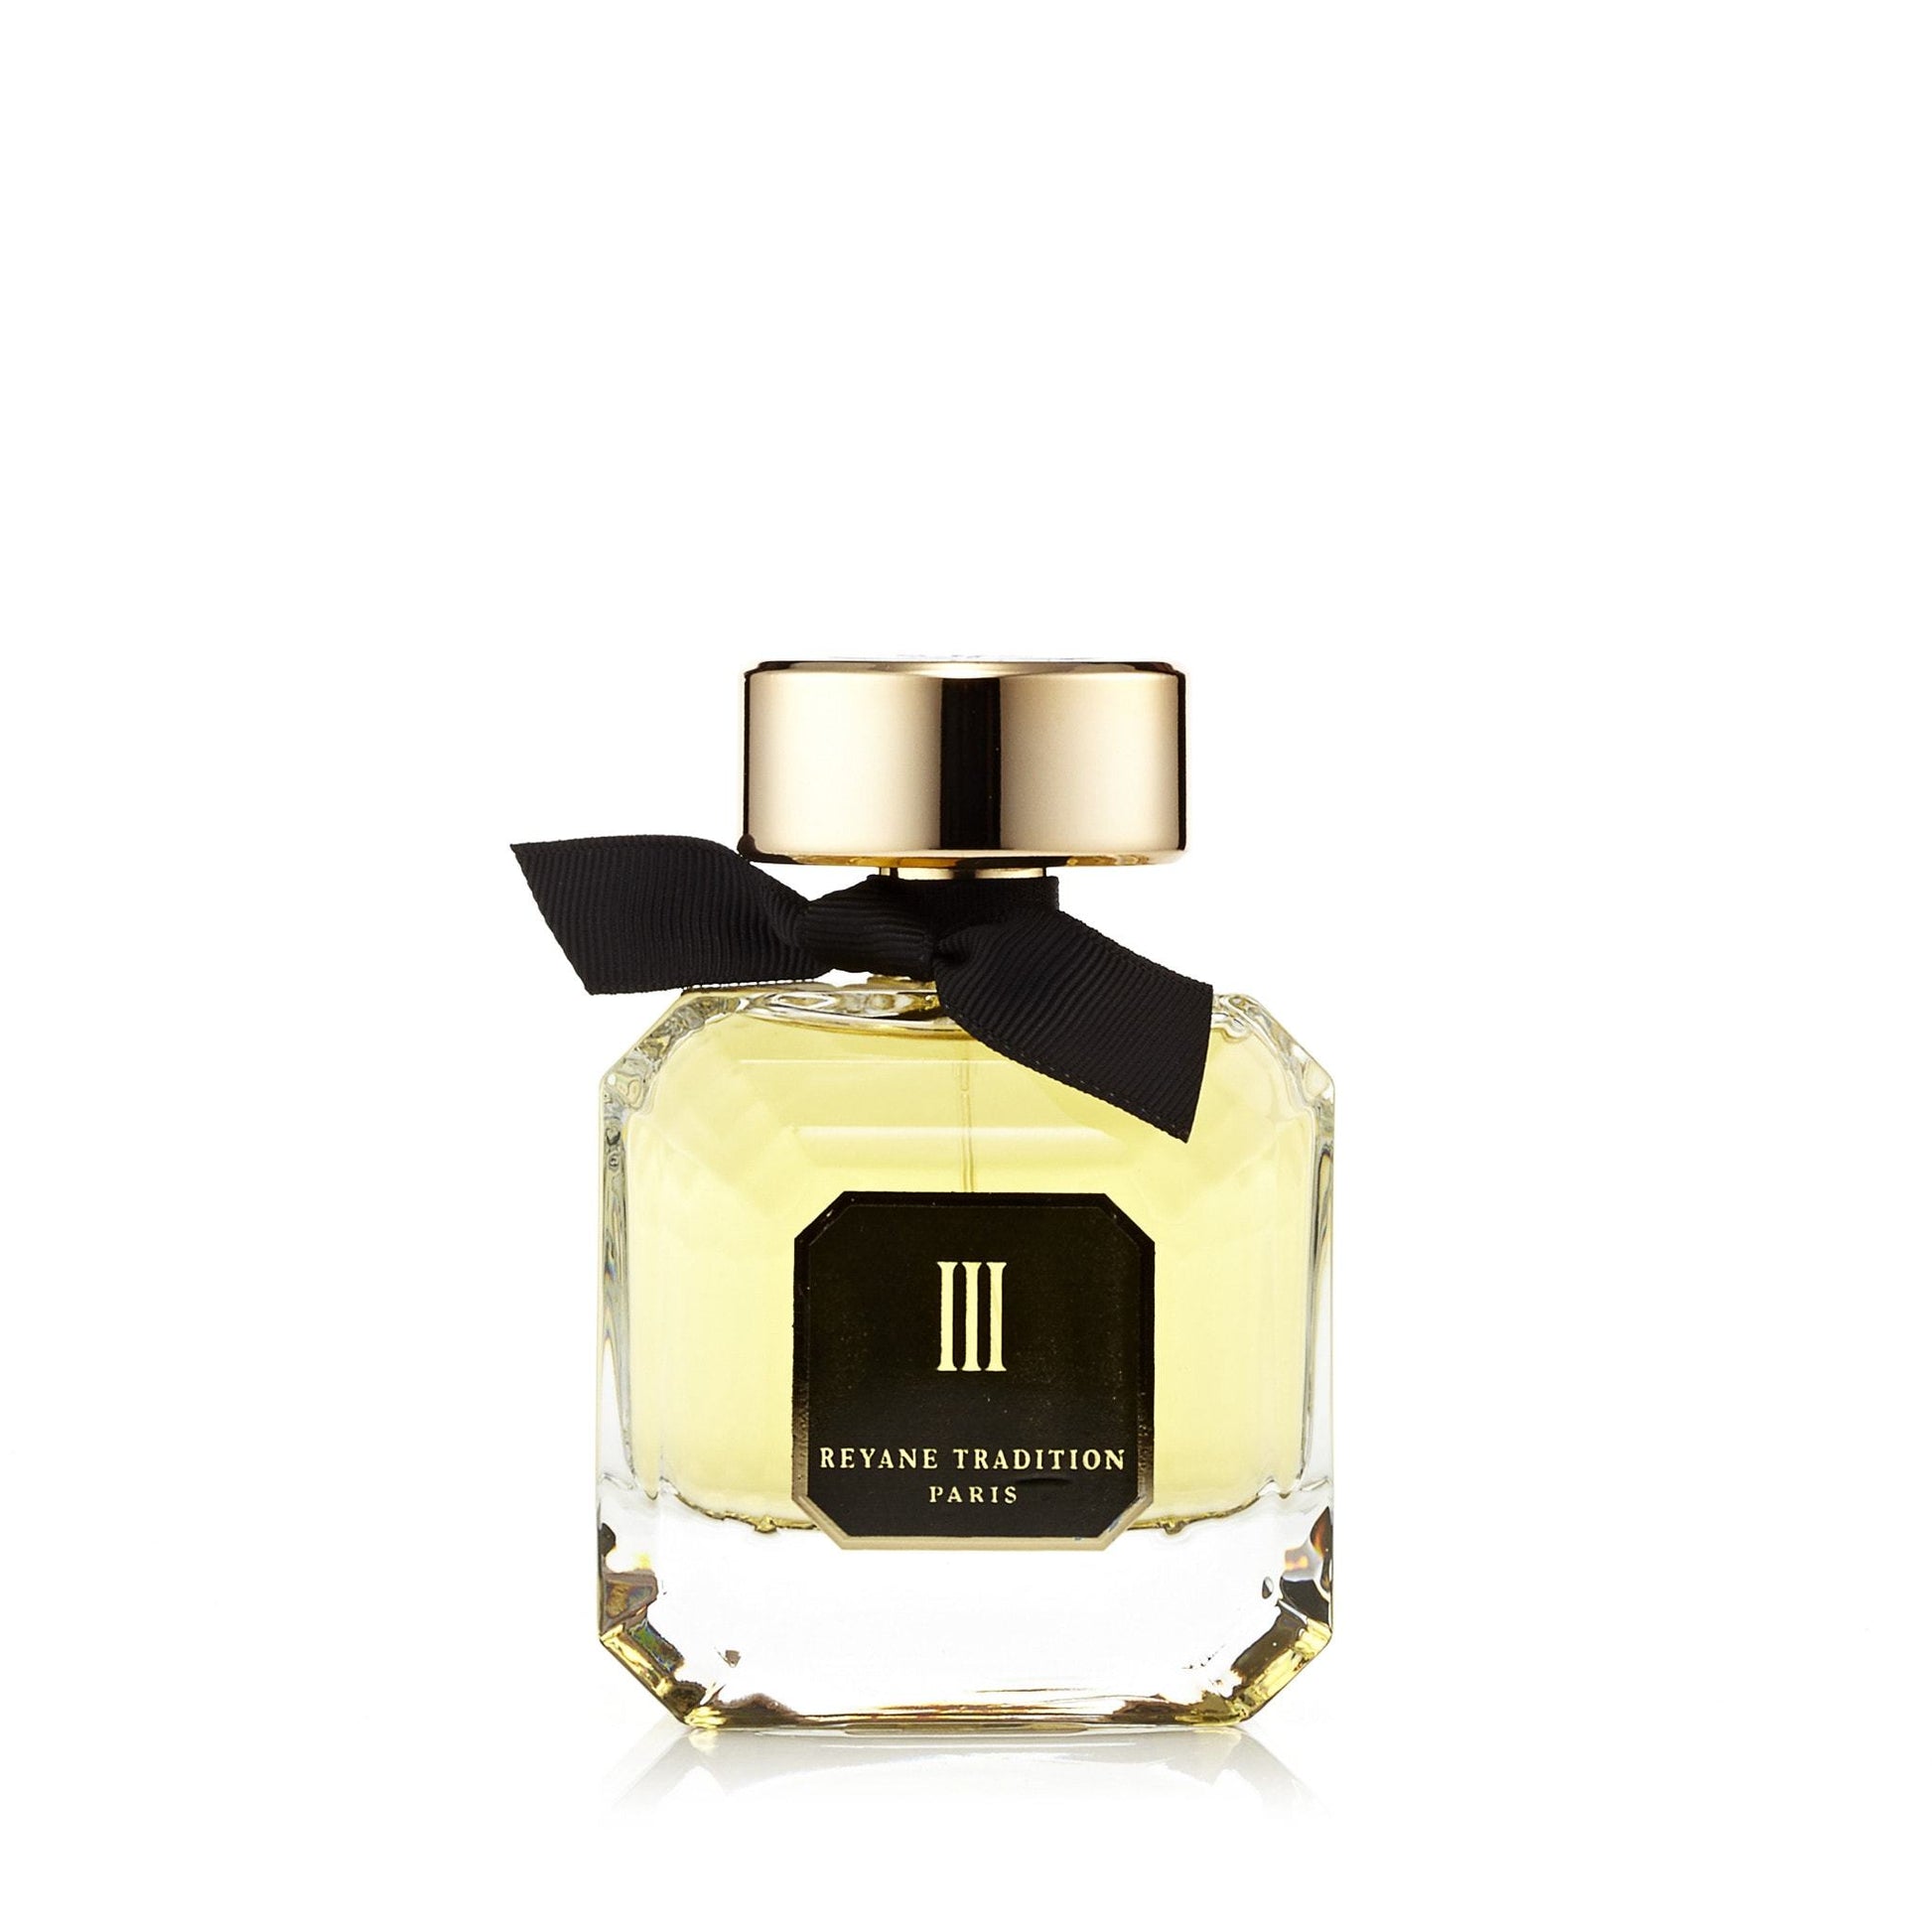 III By Reyane Tradition Eau de Parfum Spray for Women, Product image 1